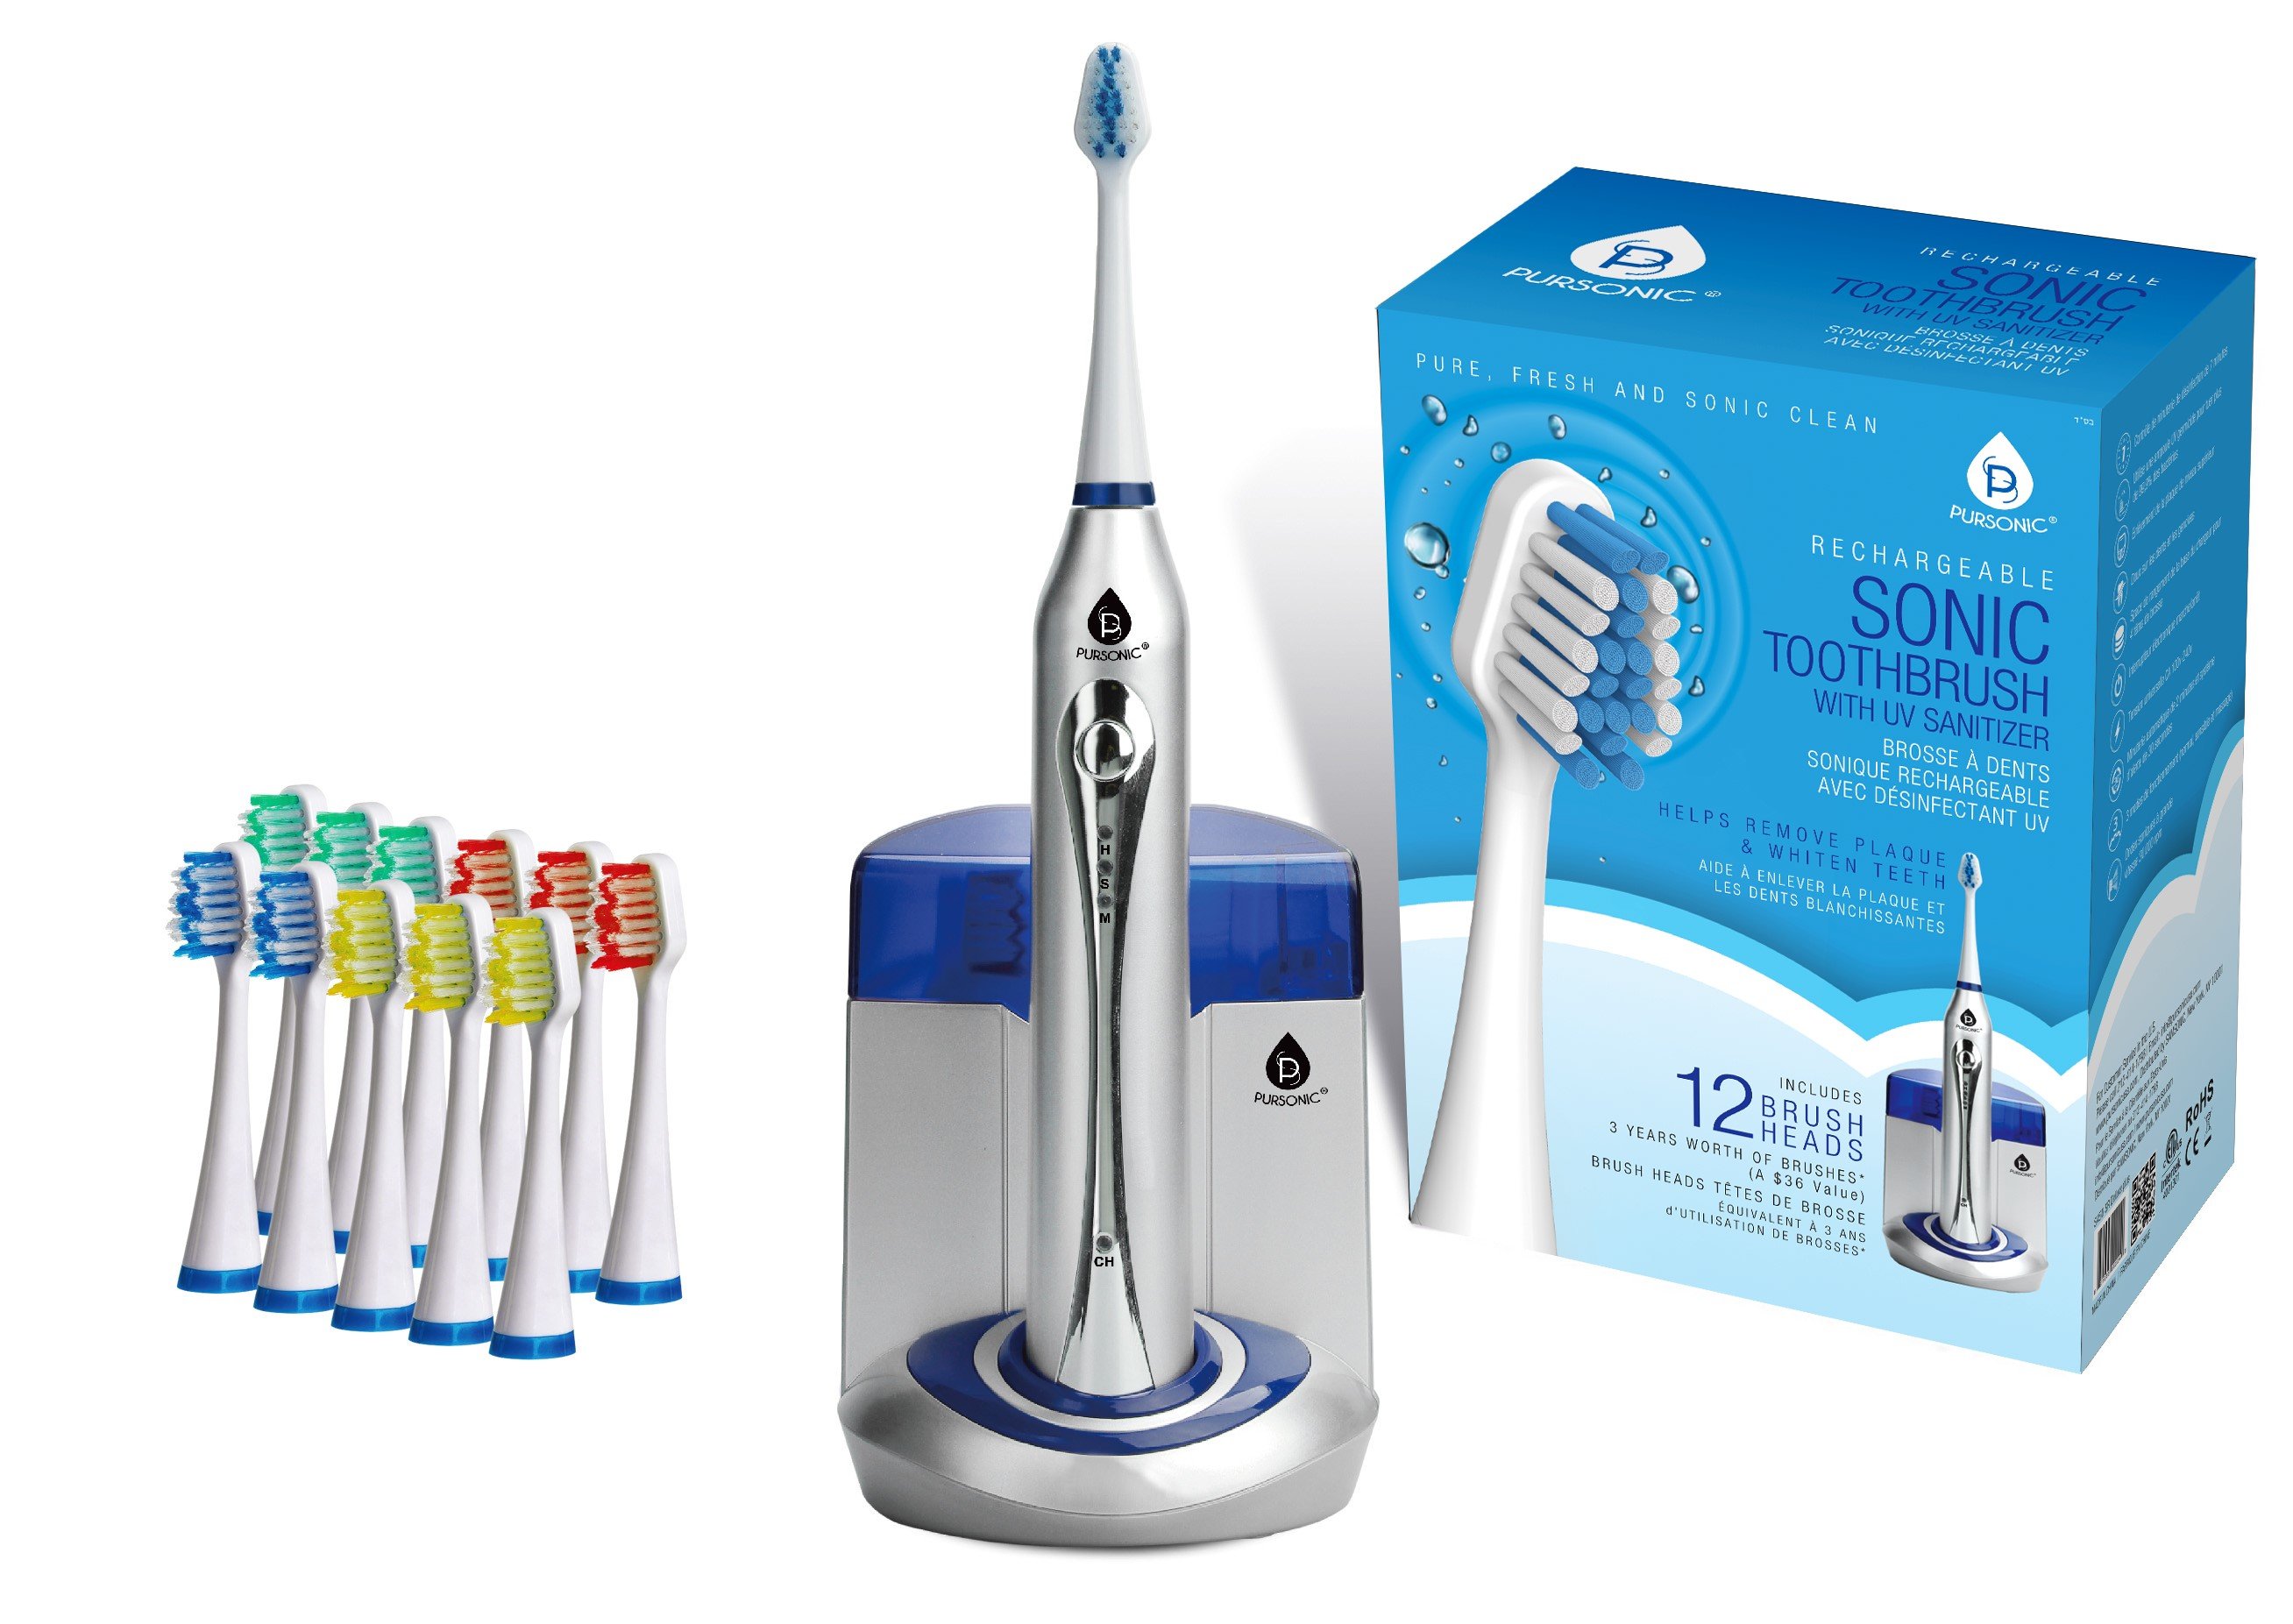 Sonic Rechargeable Toothbrush W-uv Sanitizer And 12 Bonus Brush Heads